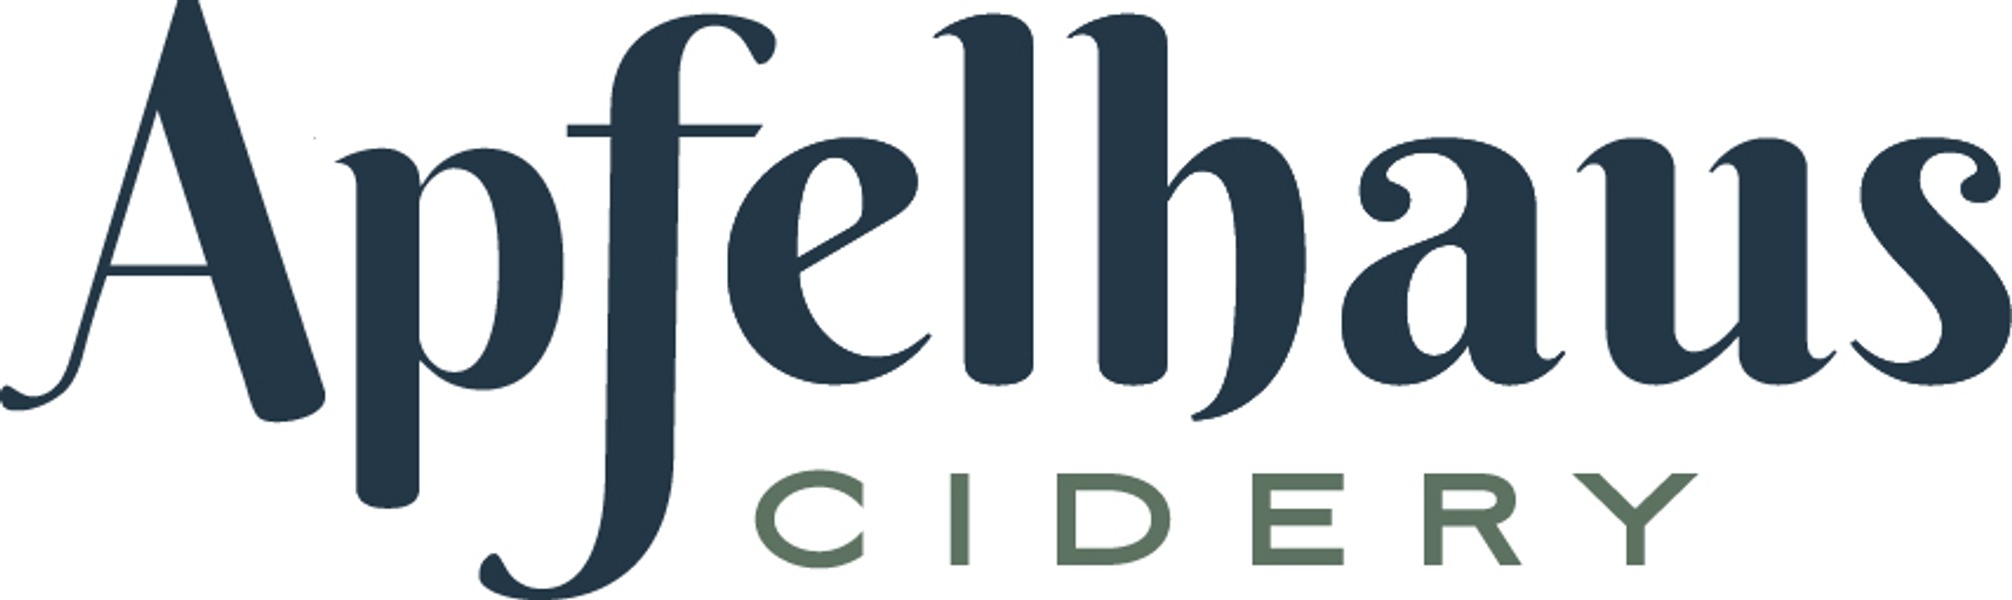 Brand for Apfelhaus Cidery